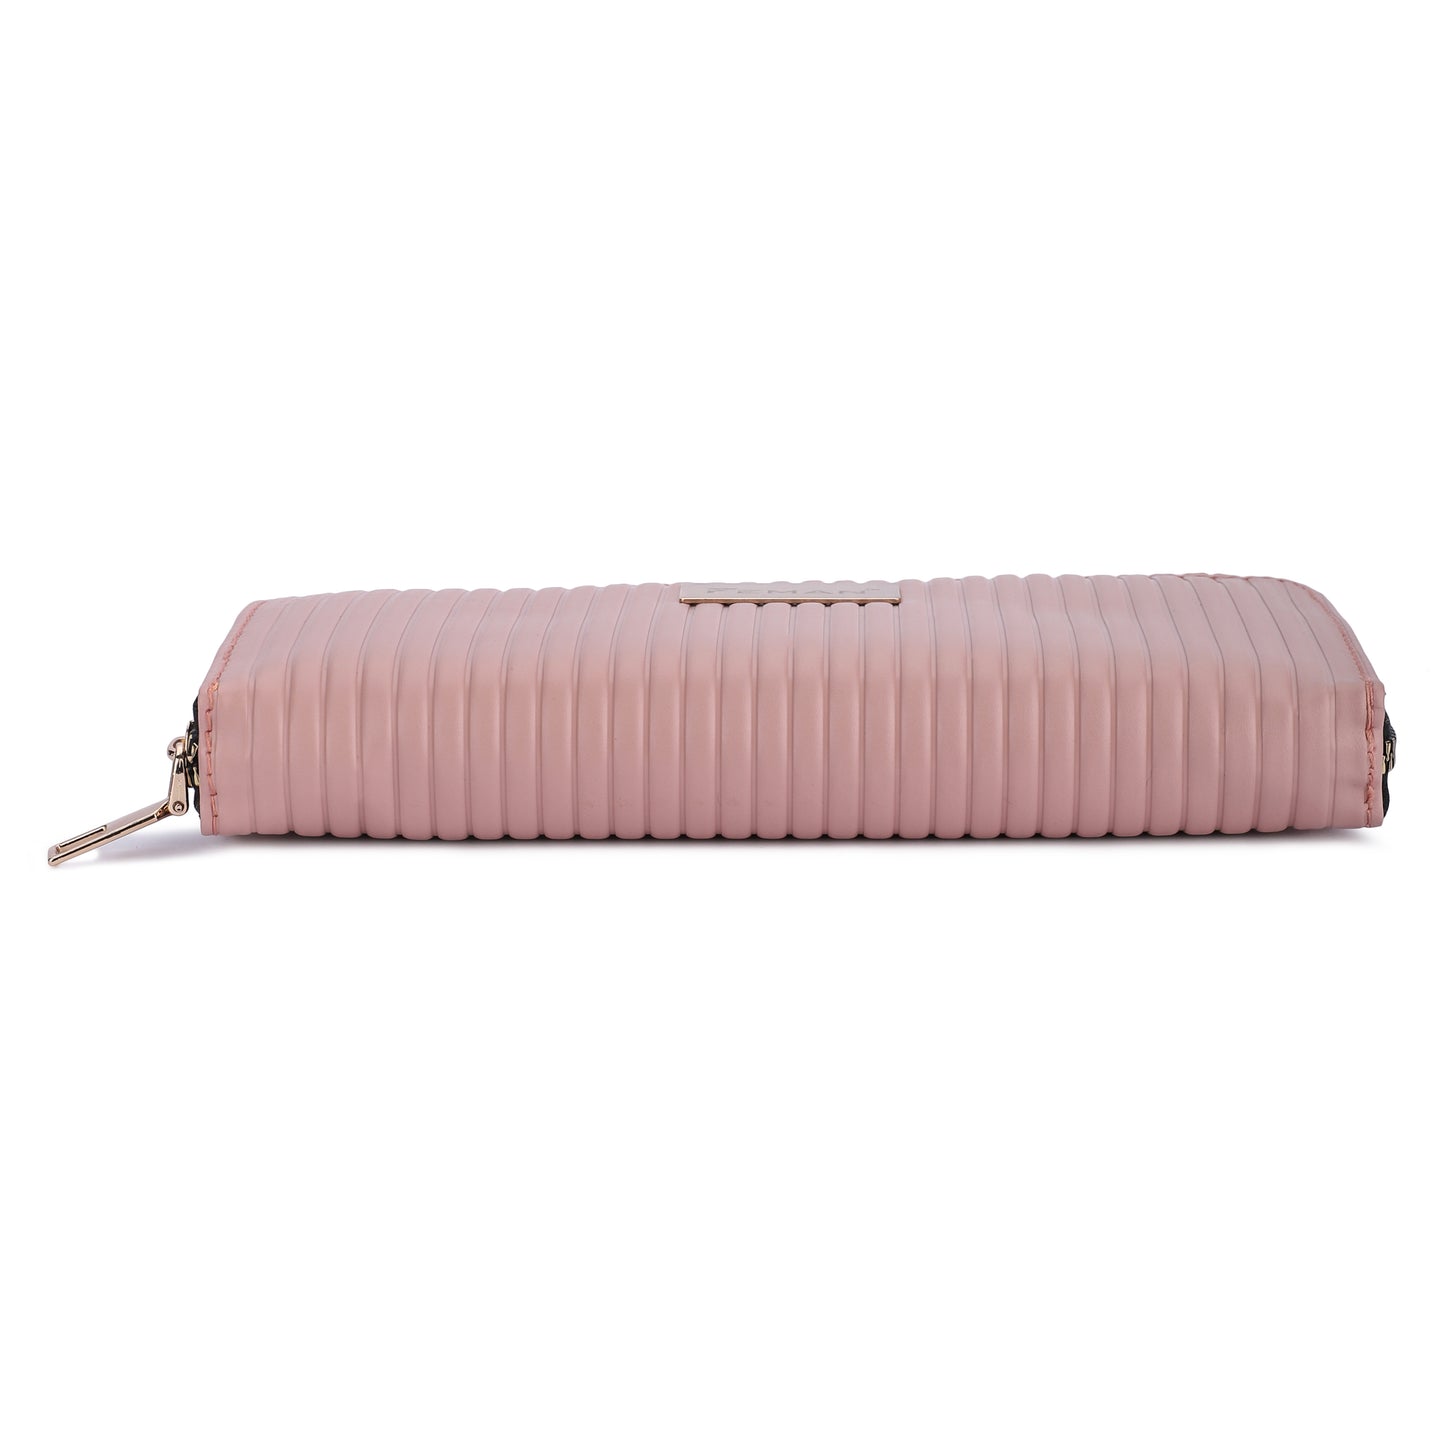 Feman Pixie Deluxe Wallets - L Pink